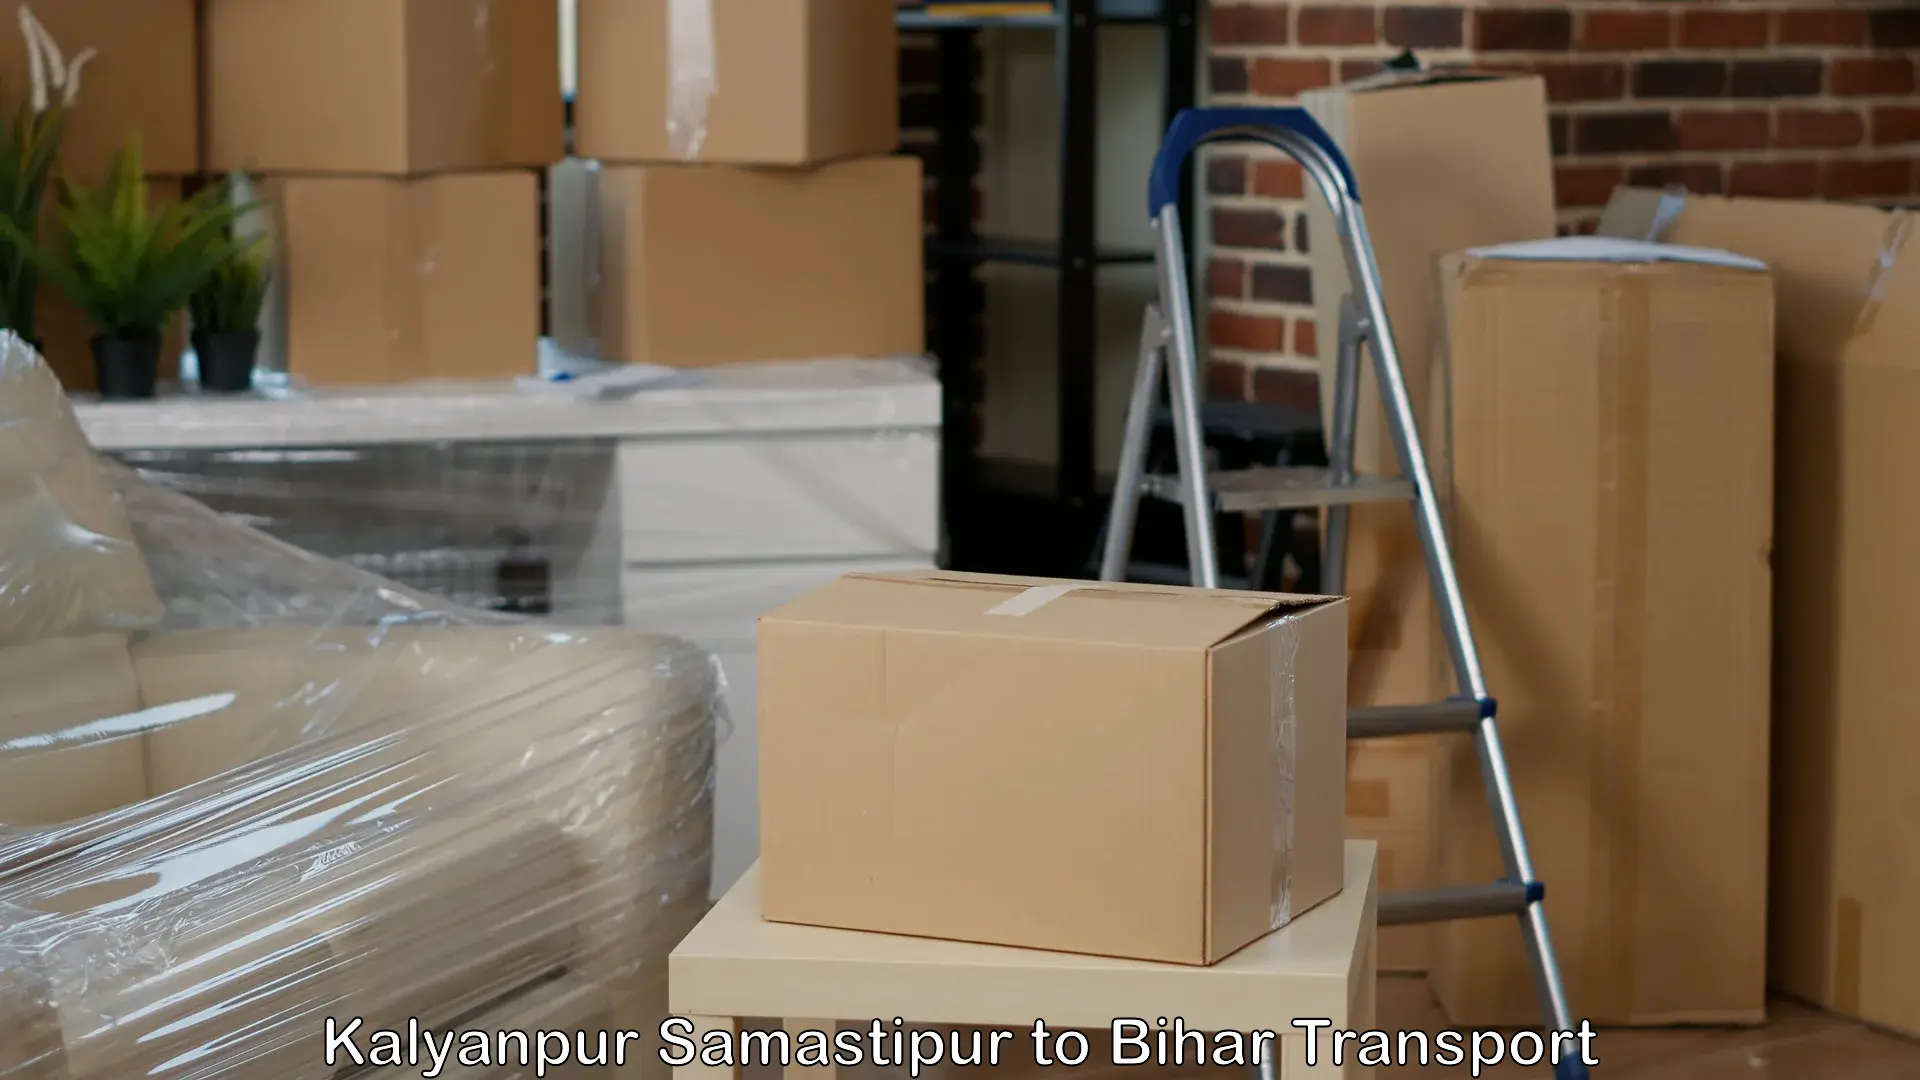 Truck transport companies in India Kalyanpur Samastipur to Vaishali